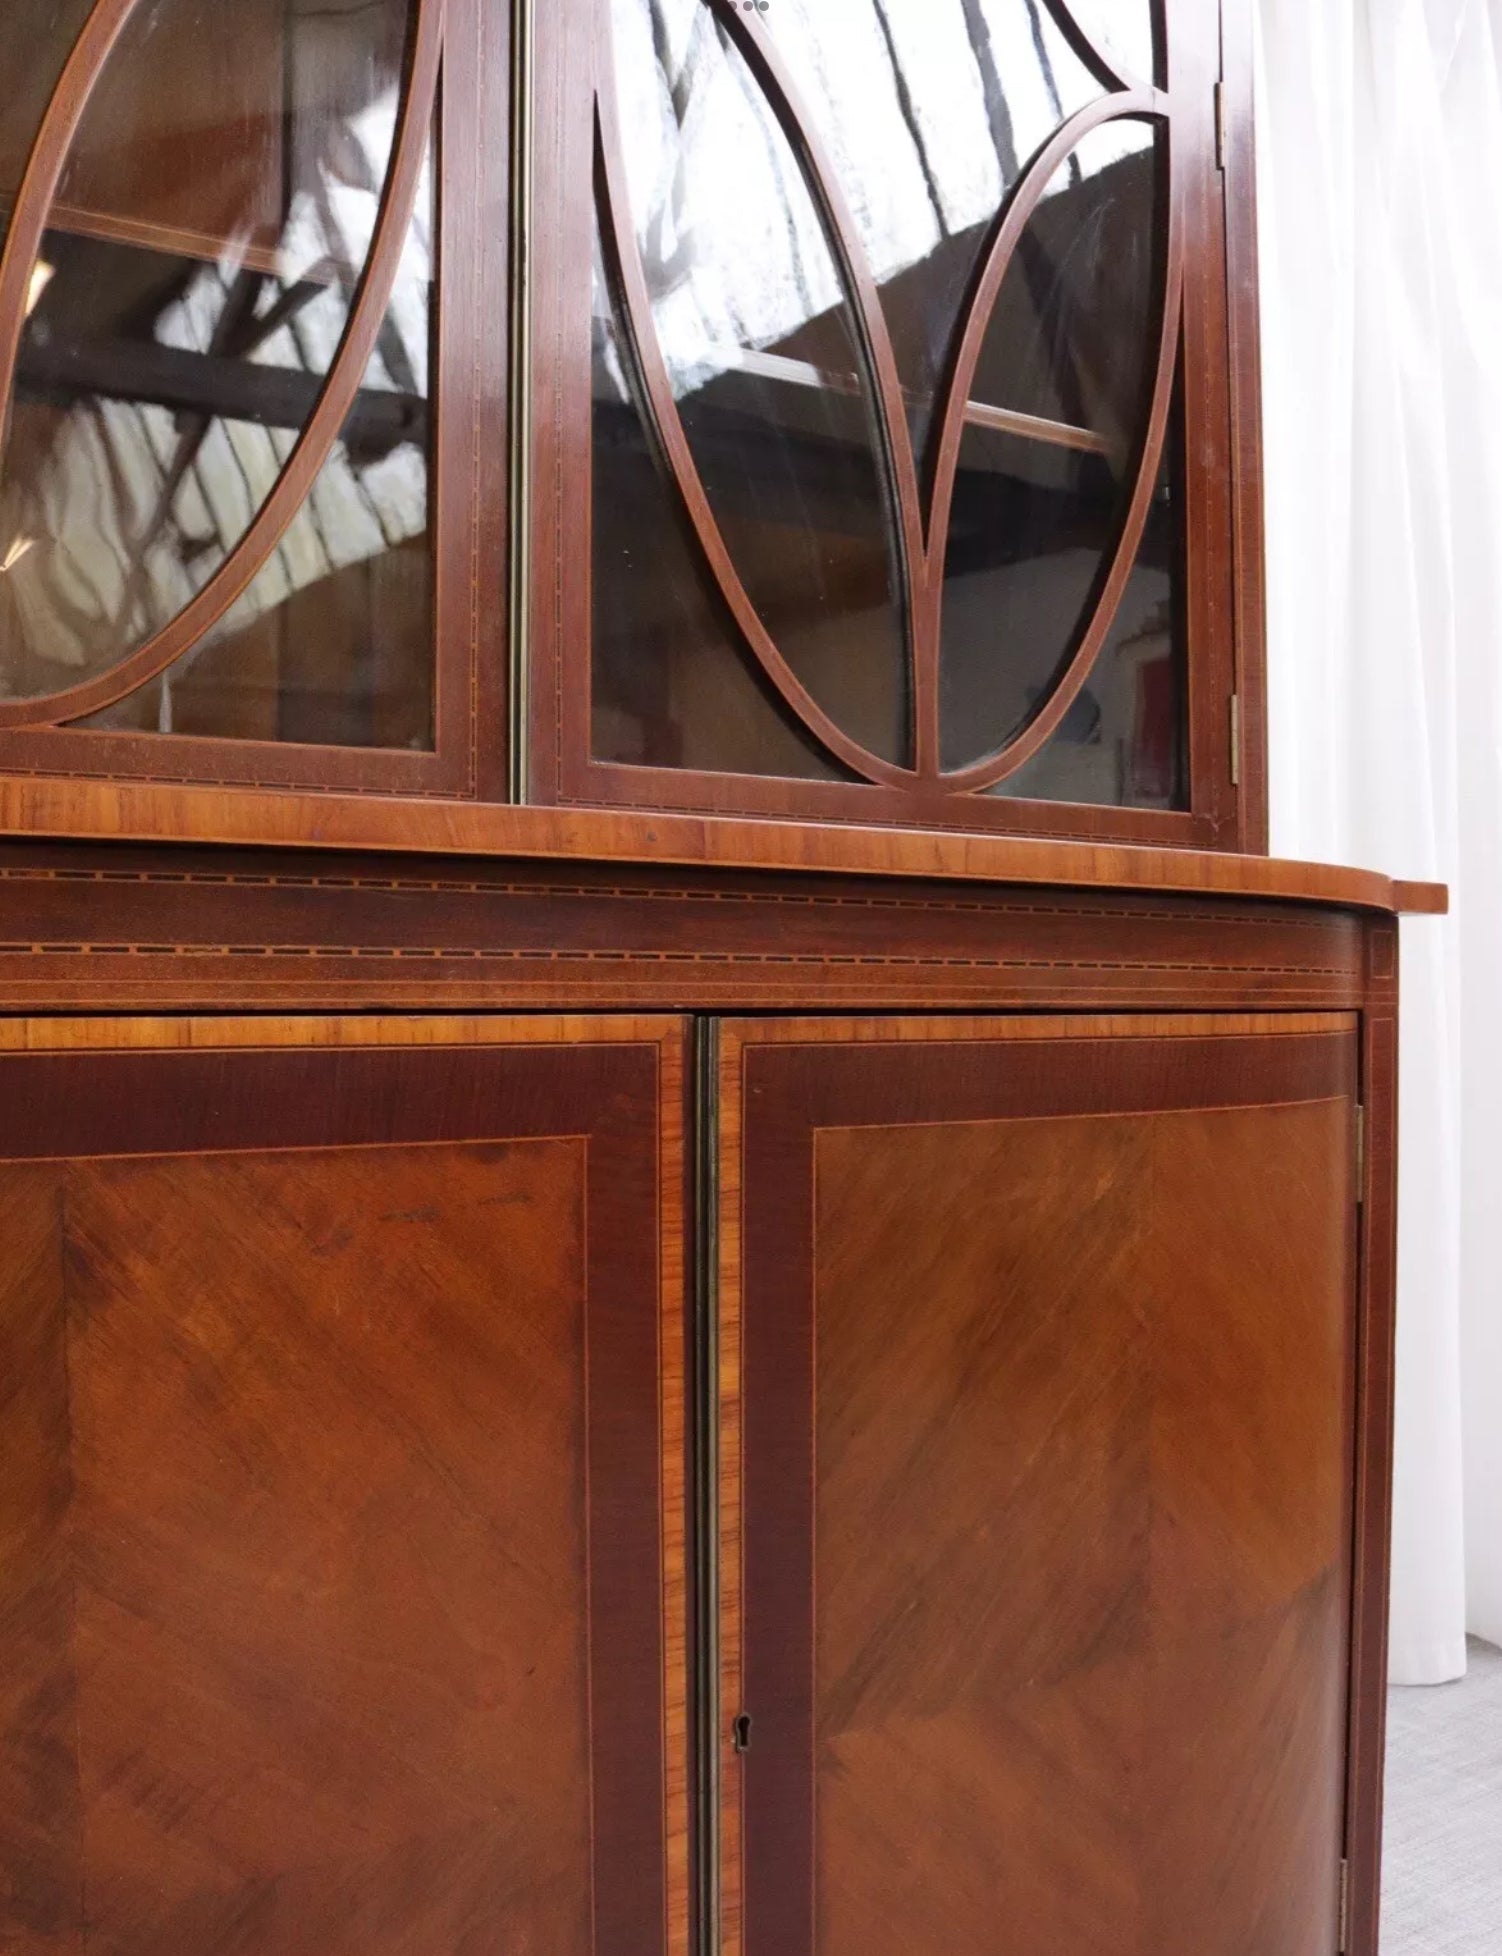 Antique Display Drinks Cabinet Edwardian Inlaid Mahogany Glass Dresser Vintage - teakyfinders